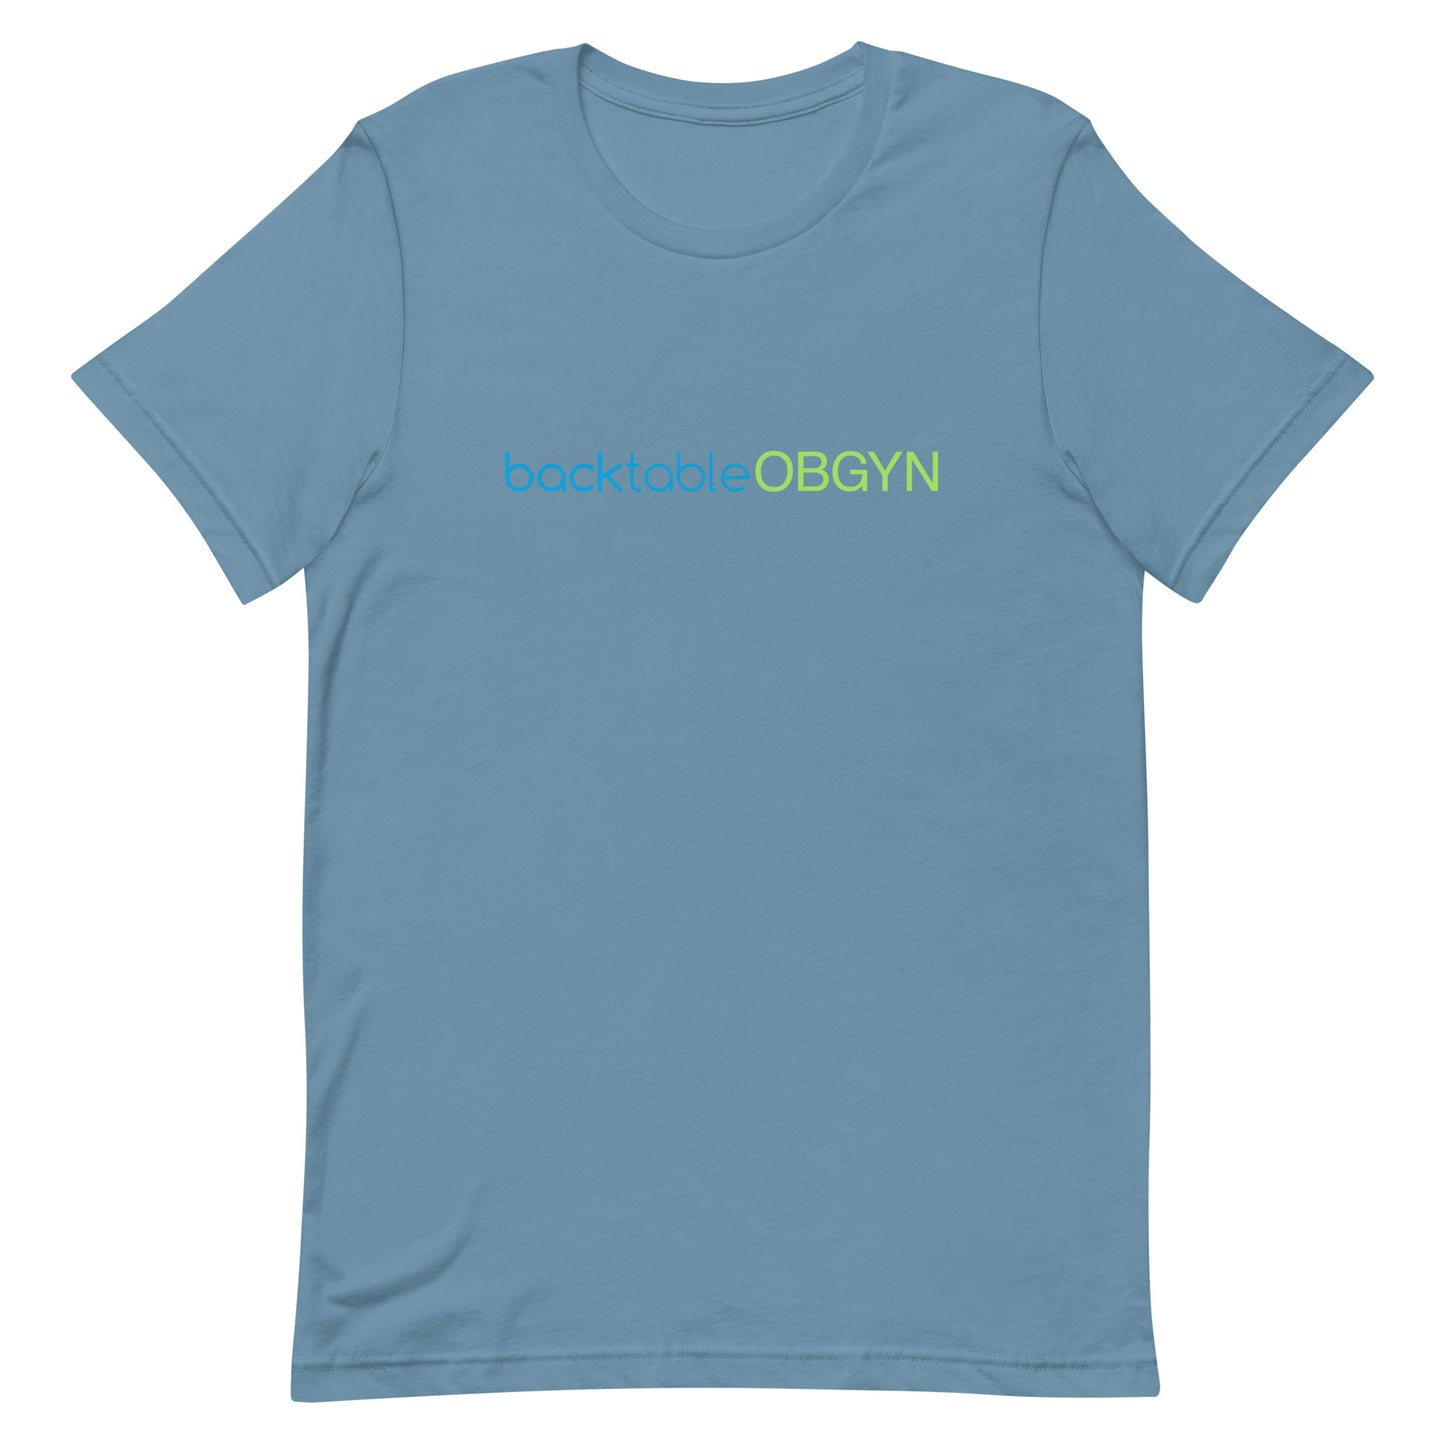 Unisex t-shirt BackTable OBGYN